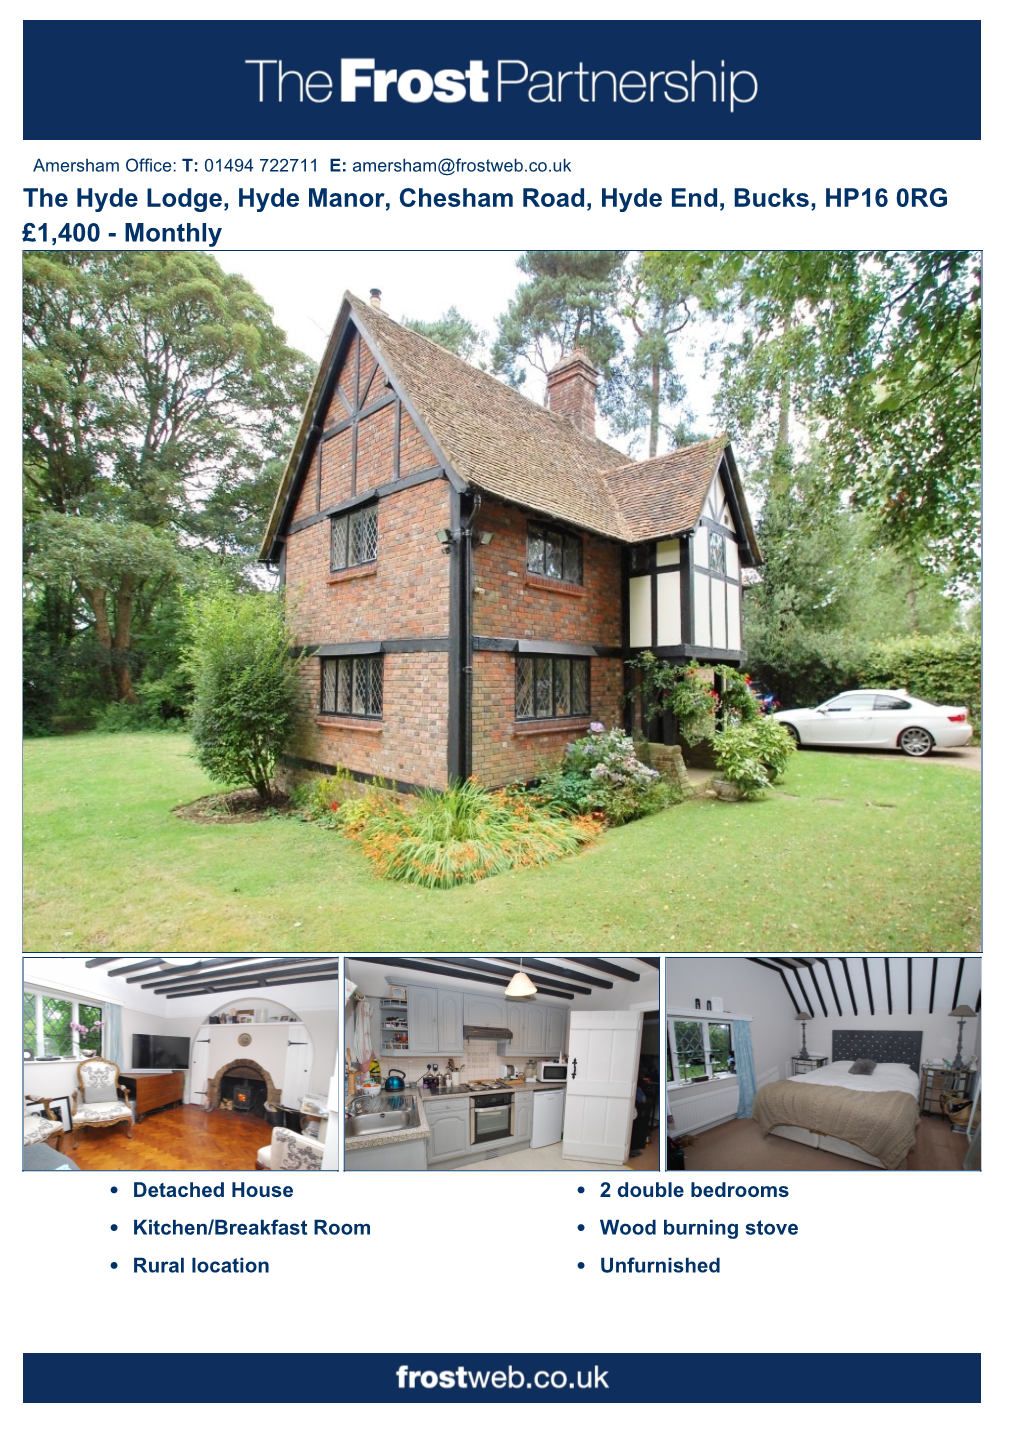 The Hyde Lodge, Hyde Manor, Chesham Road, Hyde End, Bucks, HP16 0RG £1400